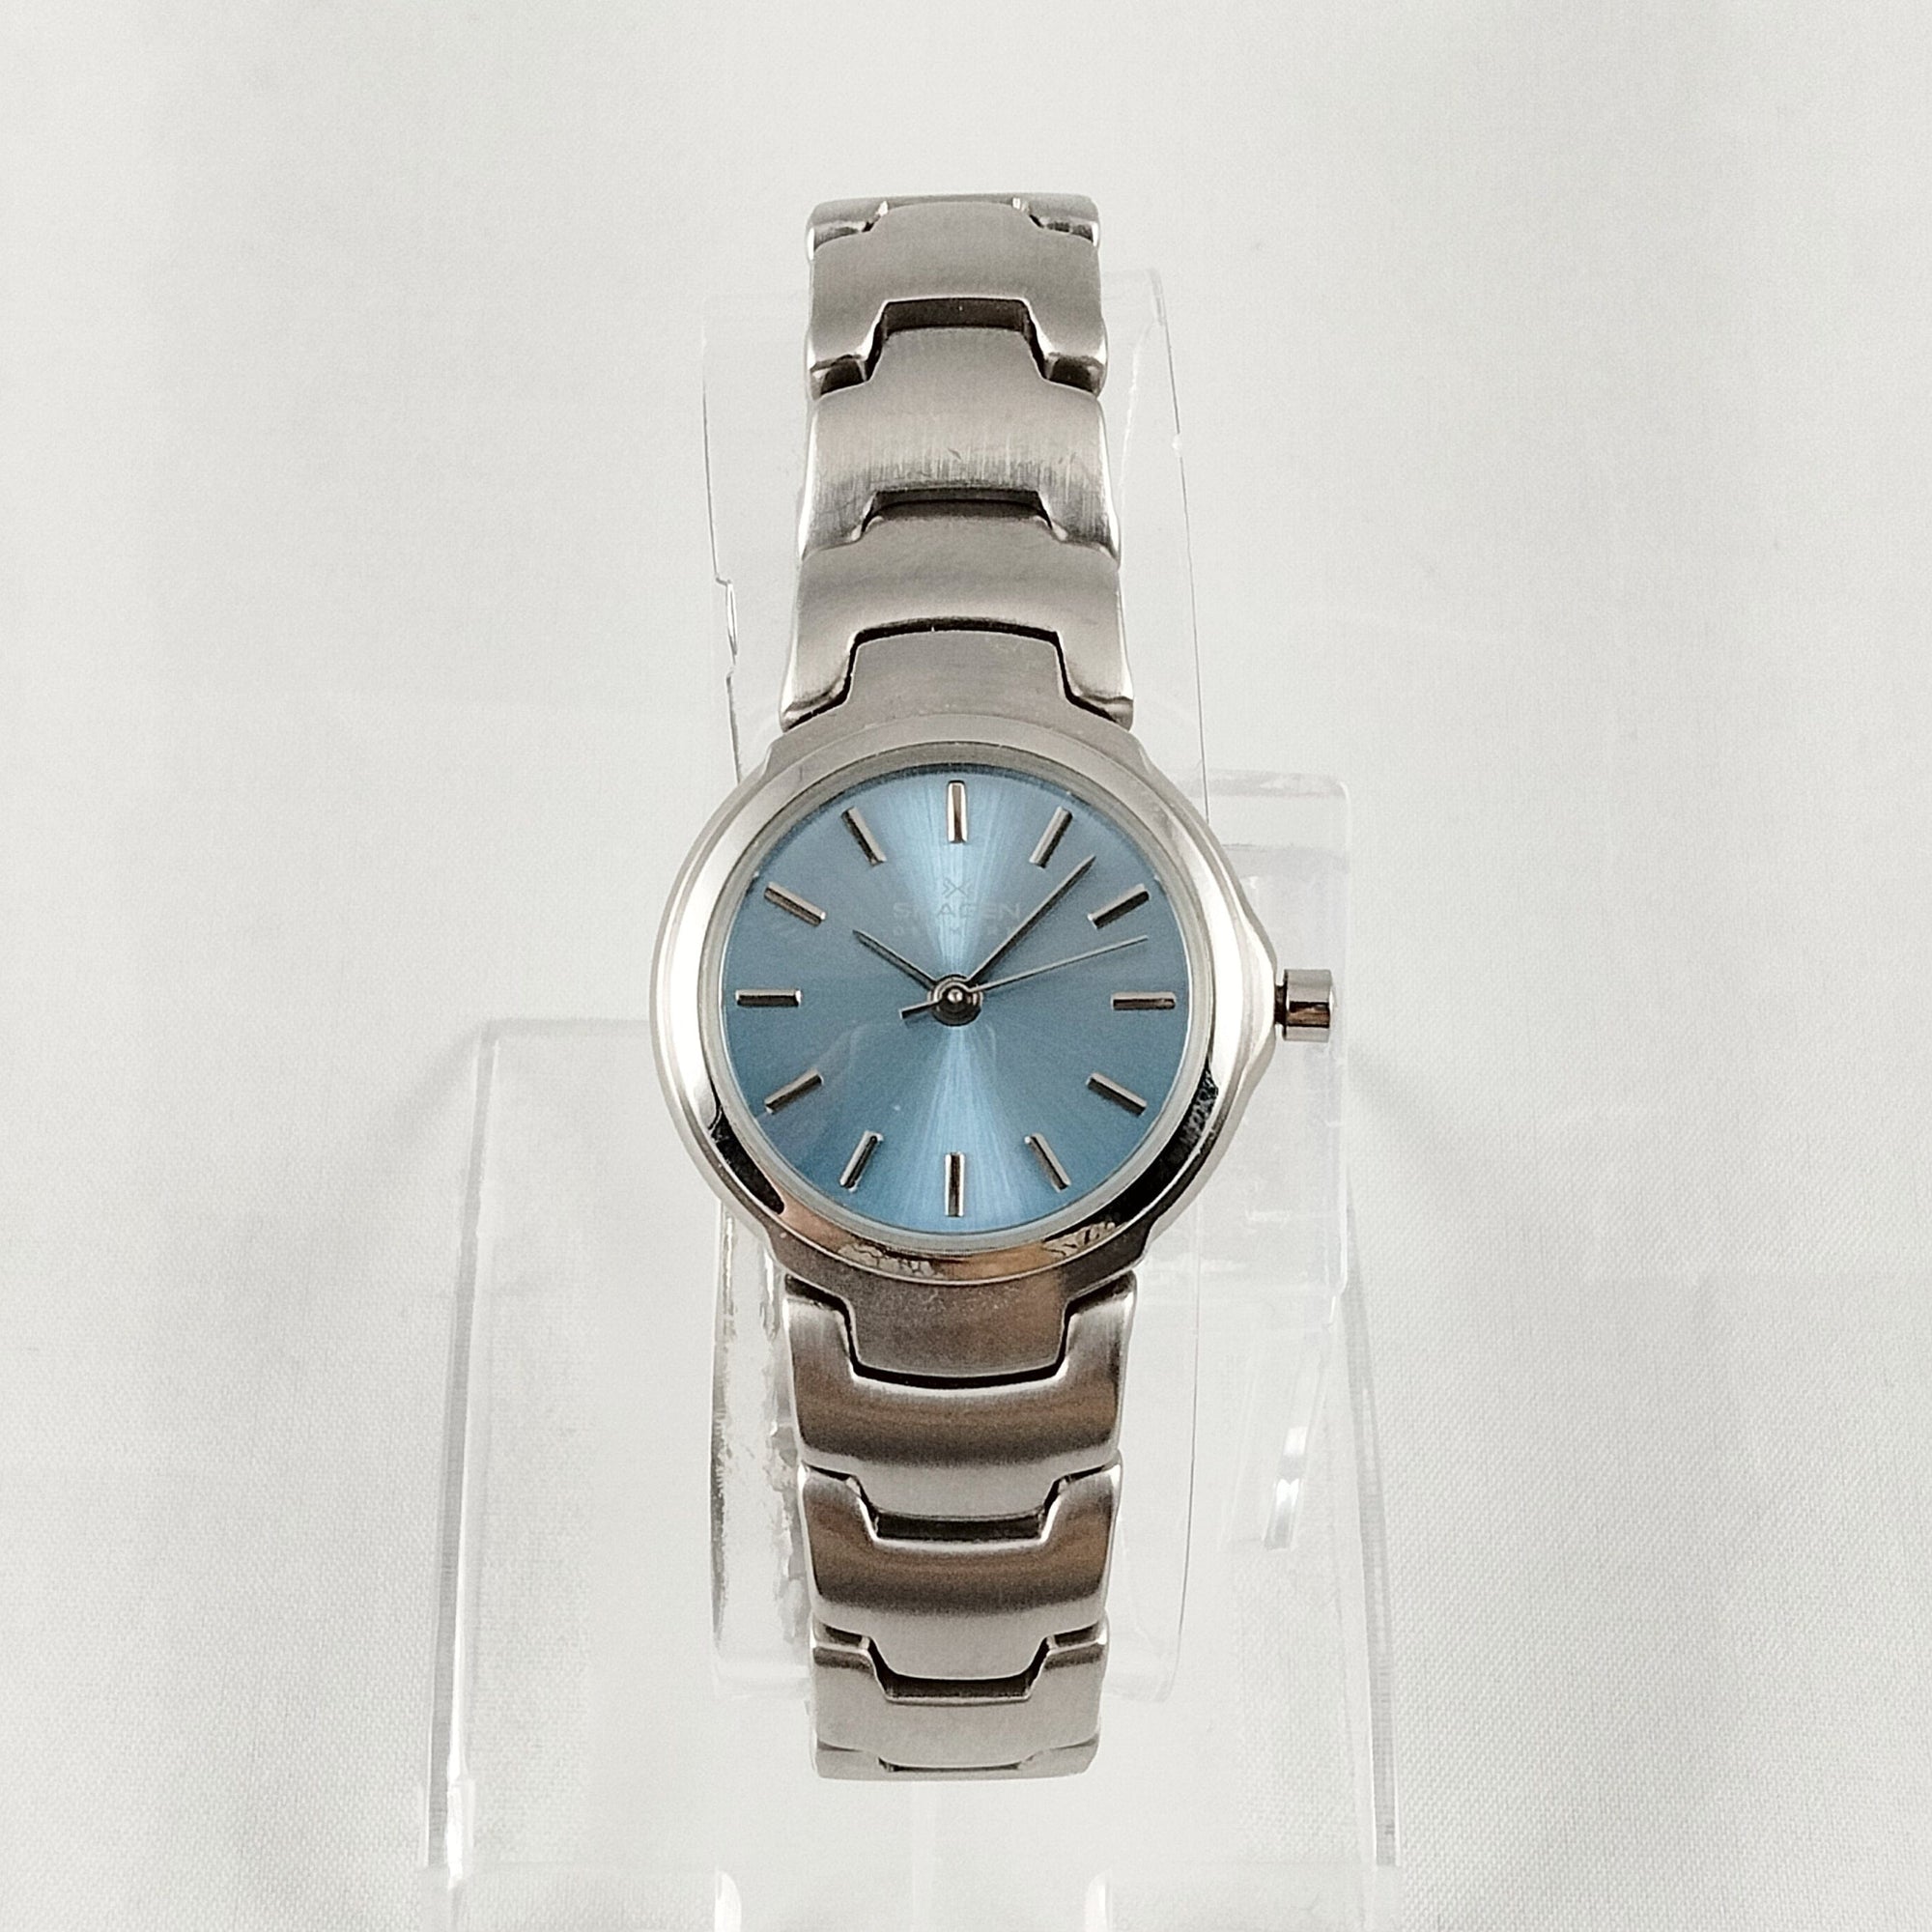 I Like Mikes Mid Century Modern Watches Skagen Women's Stainless Steel Watch, Light Blue Dial, Bracelet Strap